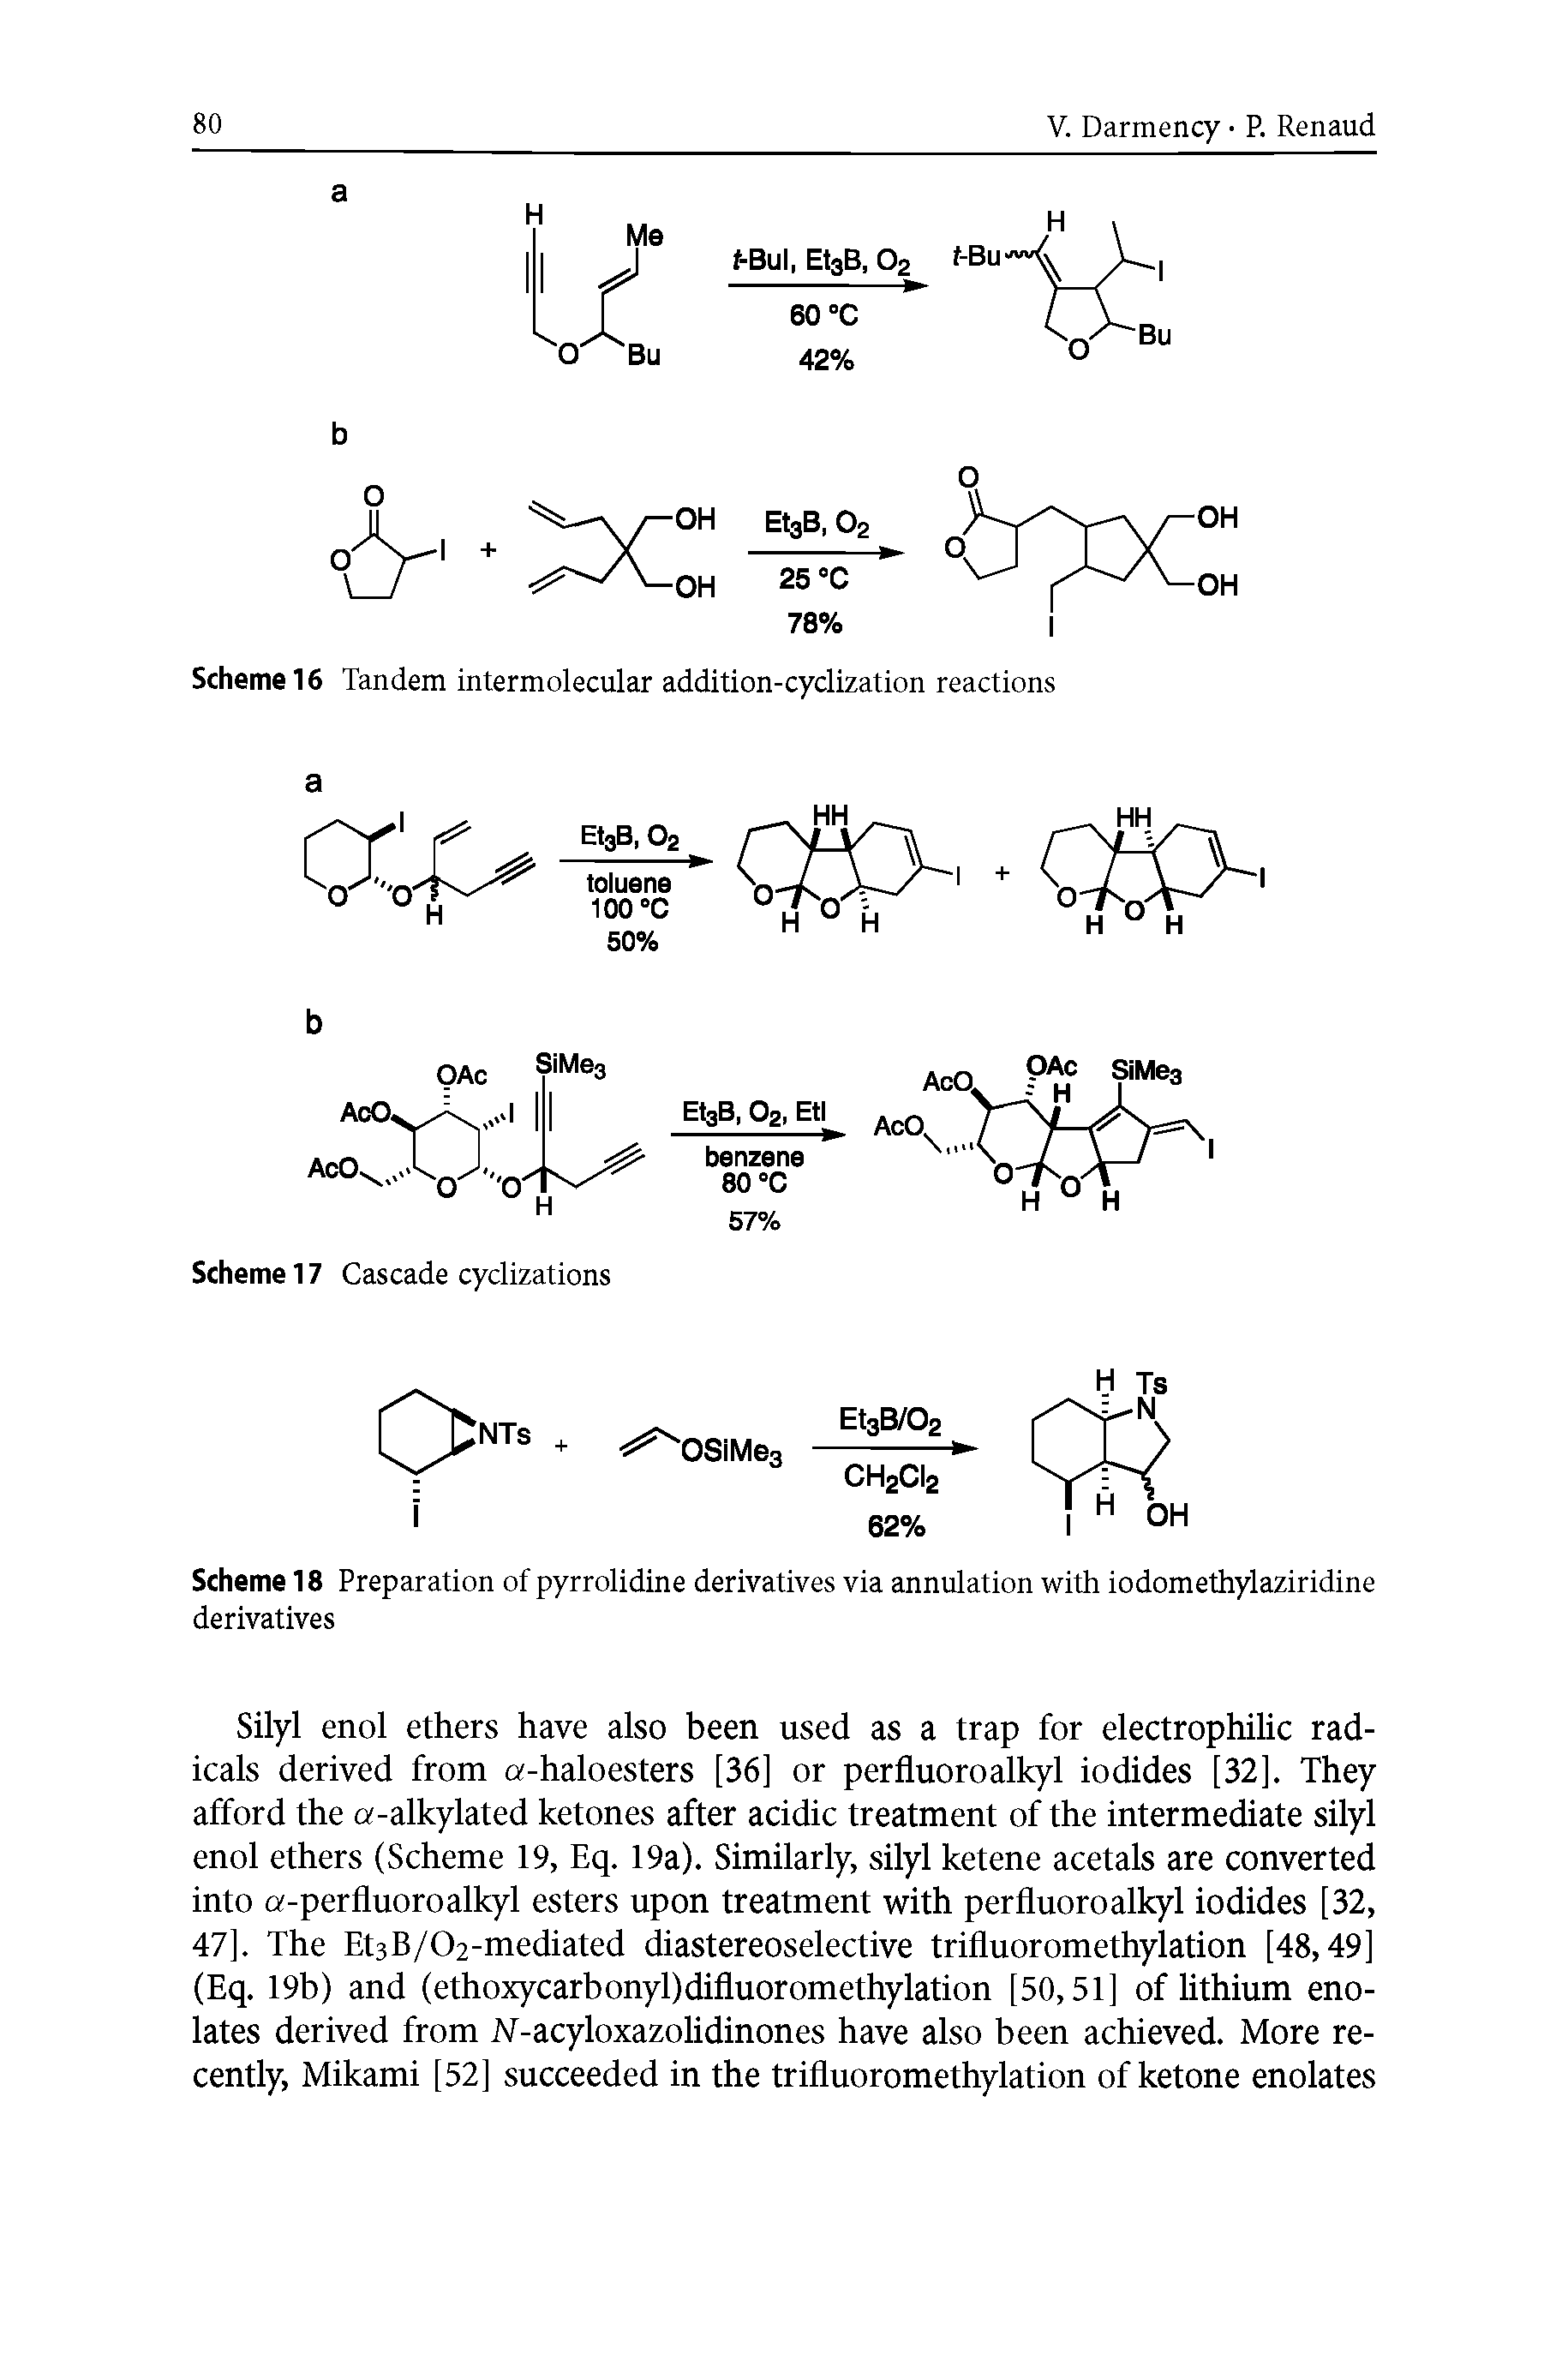 Scheme 18 Preparation of pyrrolidine derivatives via annulation with iodomethylaziridine derivatives...